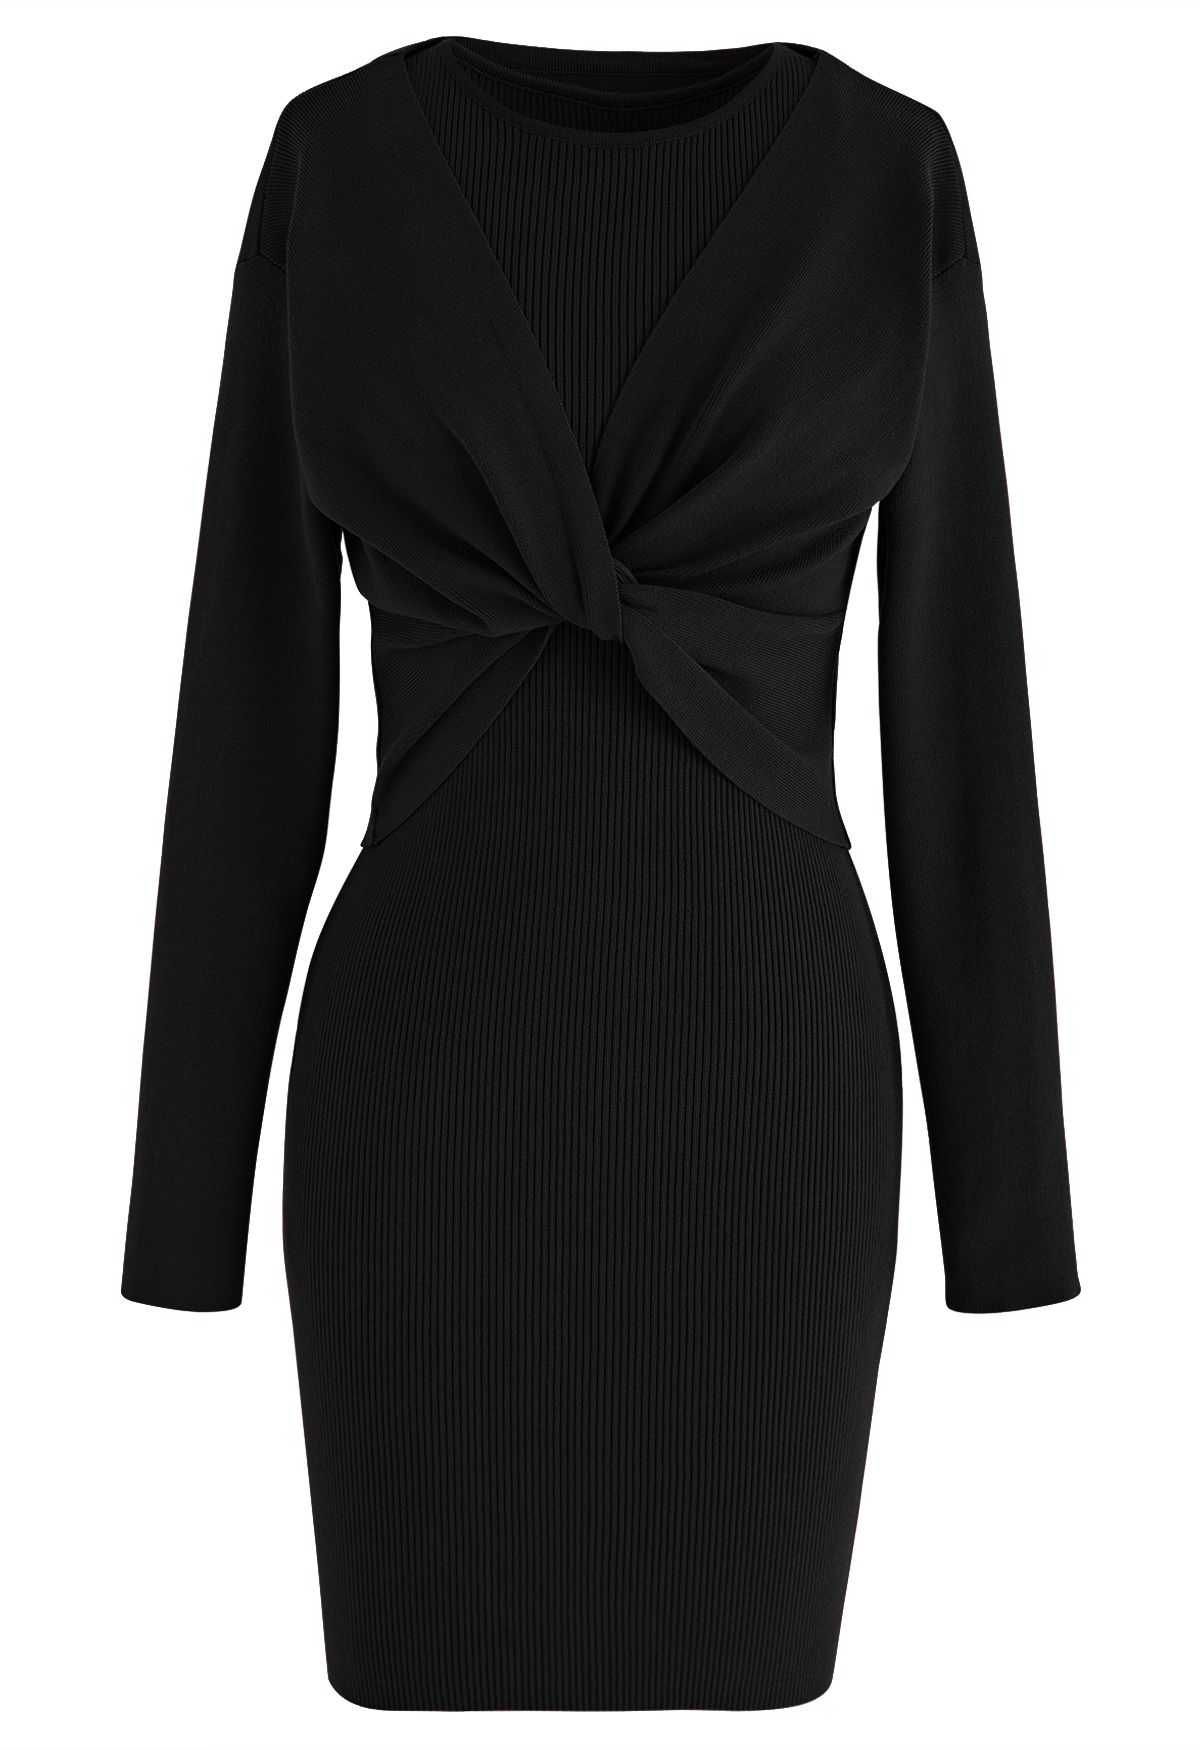 Twist Front Two-Piece Bodycon Knit Dress in Black